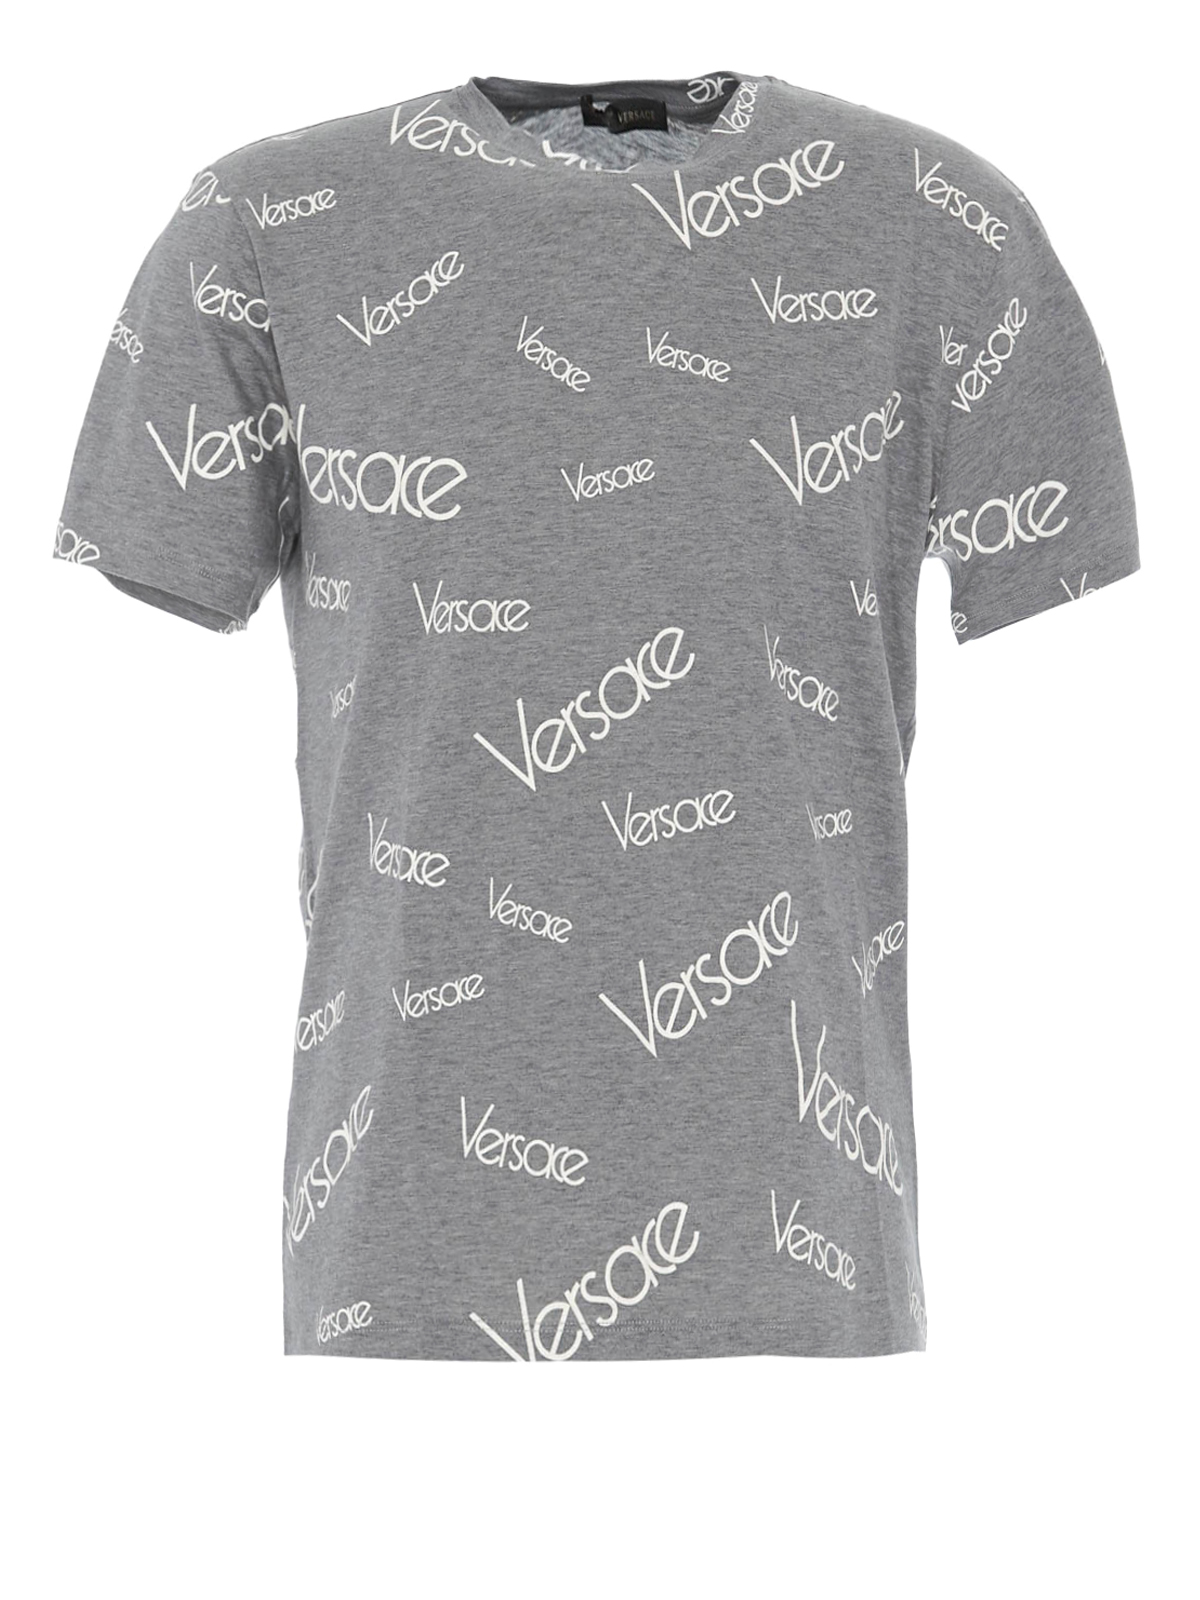 versace grey t shirt